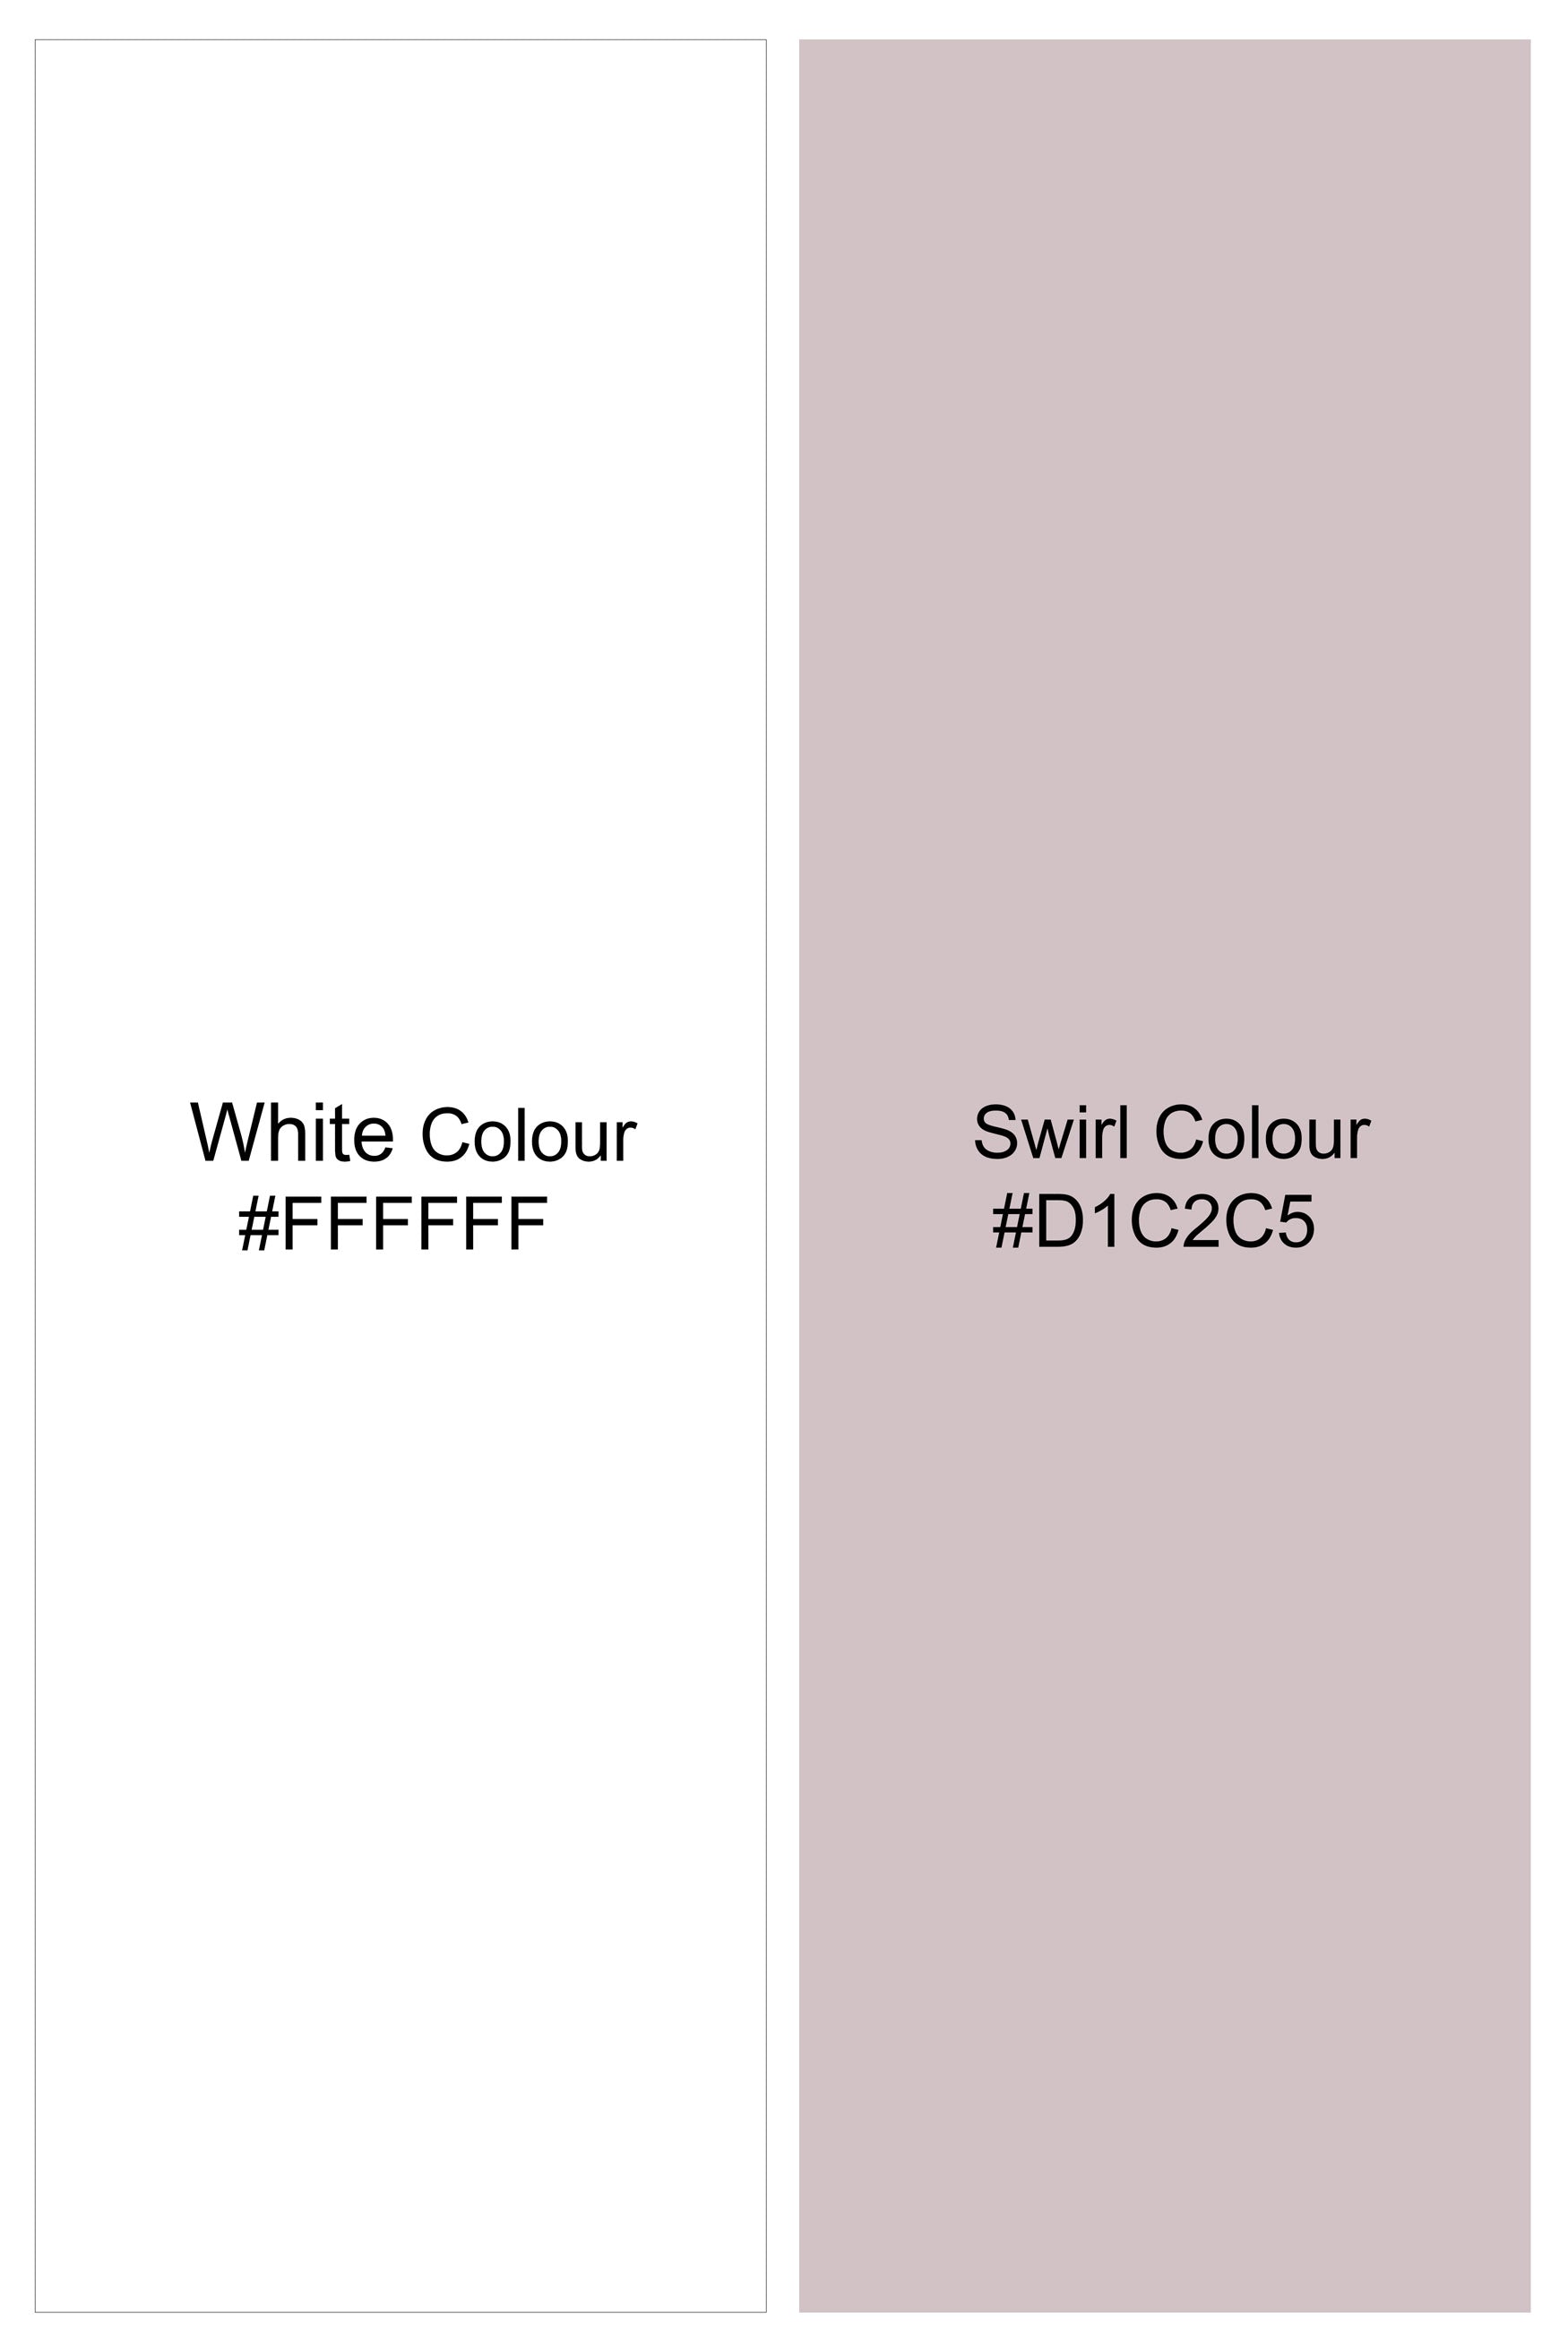 Bright White and Swirl Pink Striped Premium Cotton Shorts SR400-28, SR400-30, SR400-32, SR400-34, SR400-36, SR400-38, SR400-40, SR400-42, SR400-44